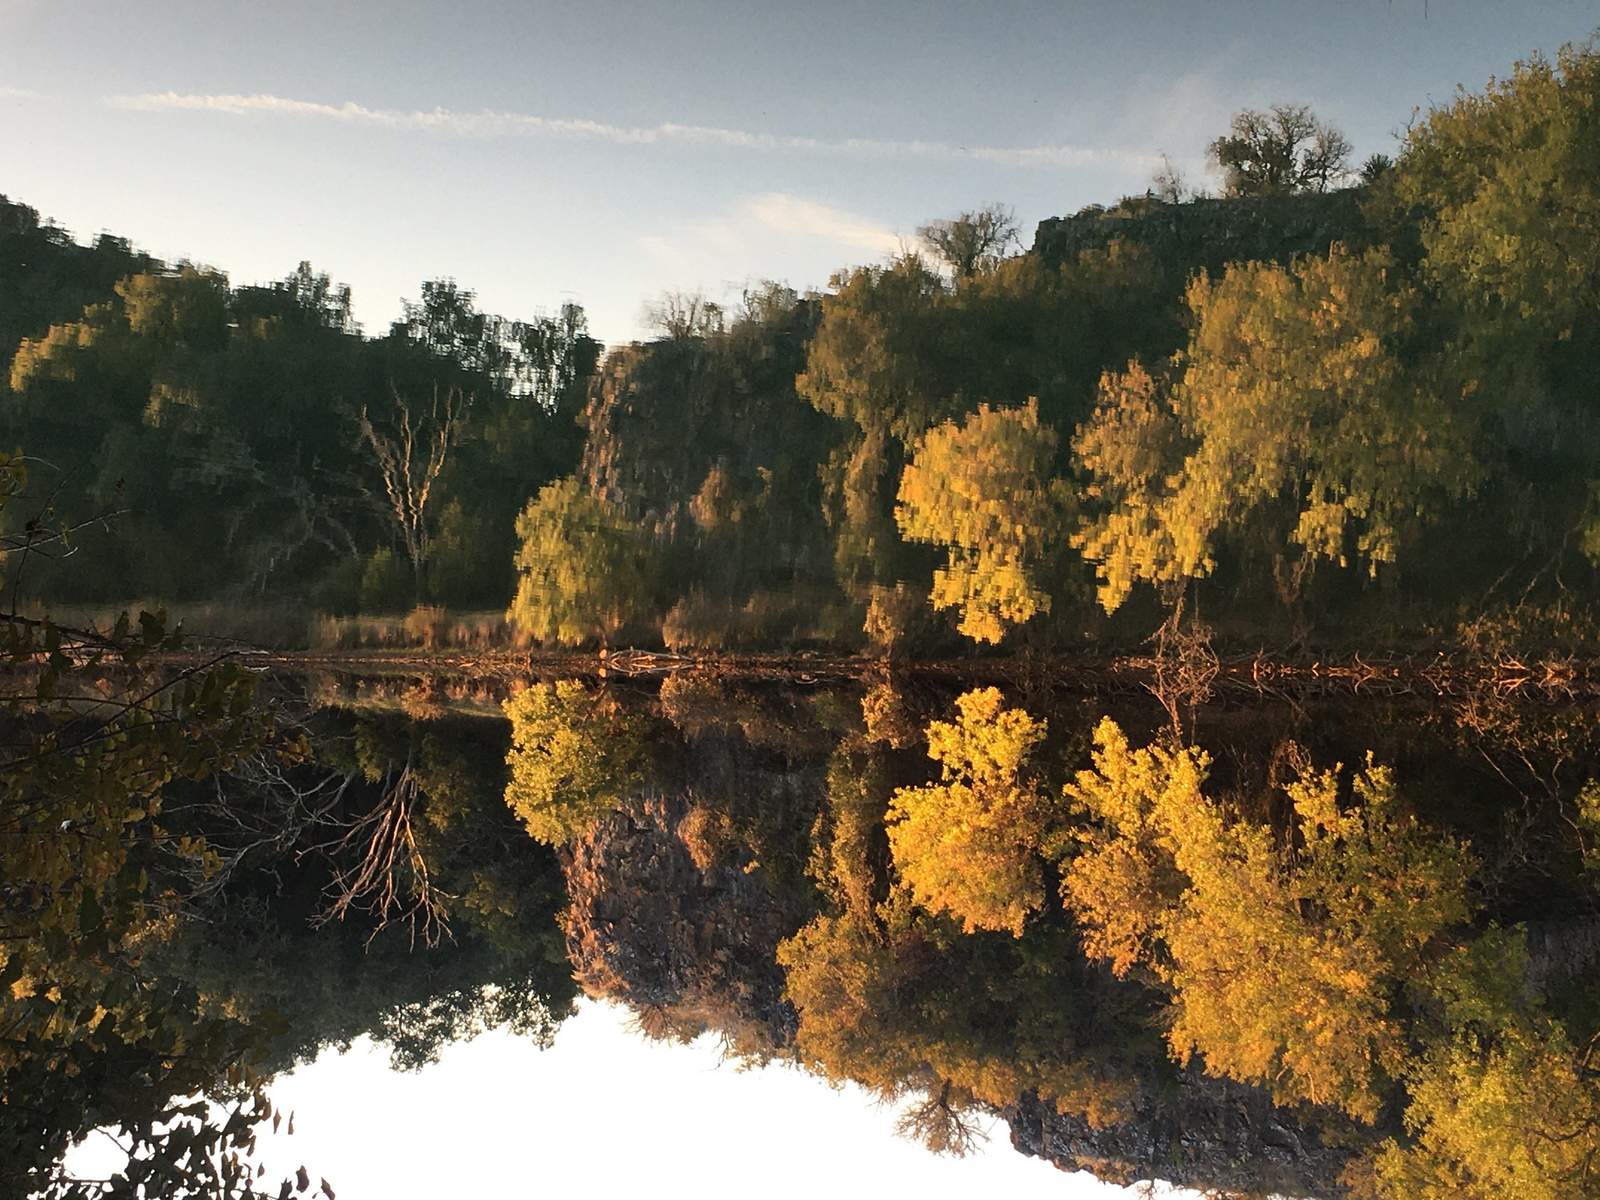 Photos: Fall foliage creating postcard-worthy views at Texas state parks